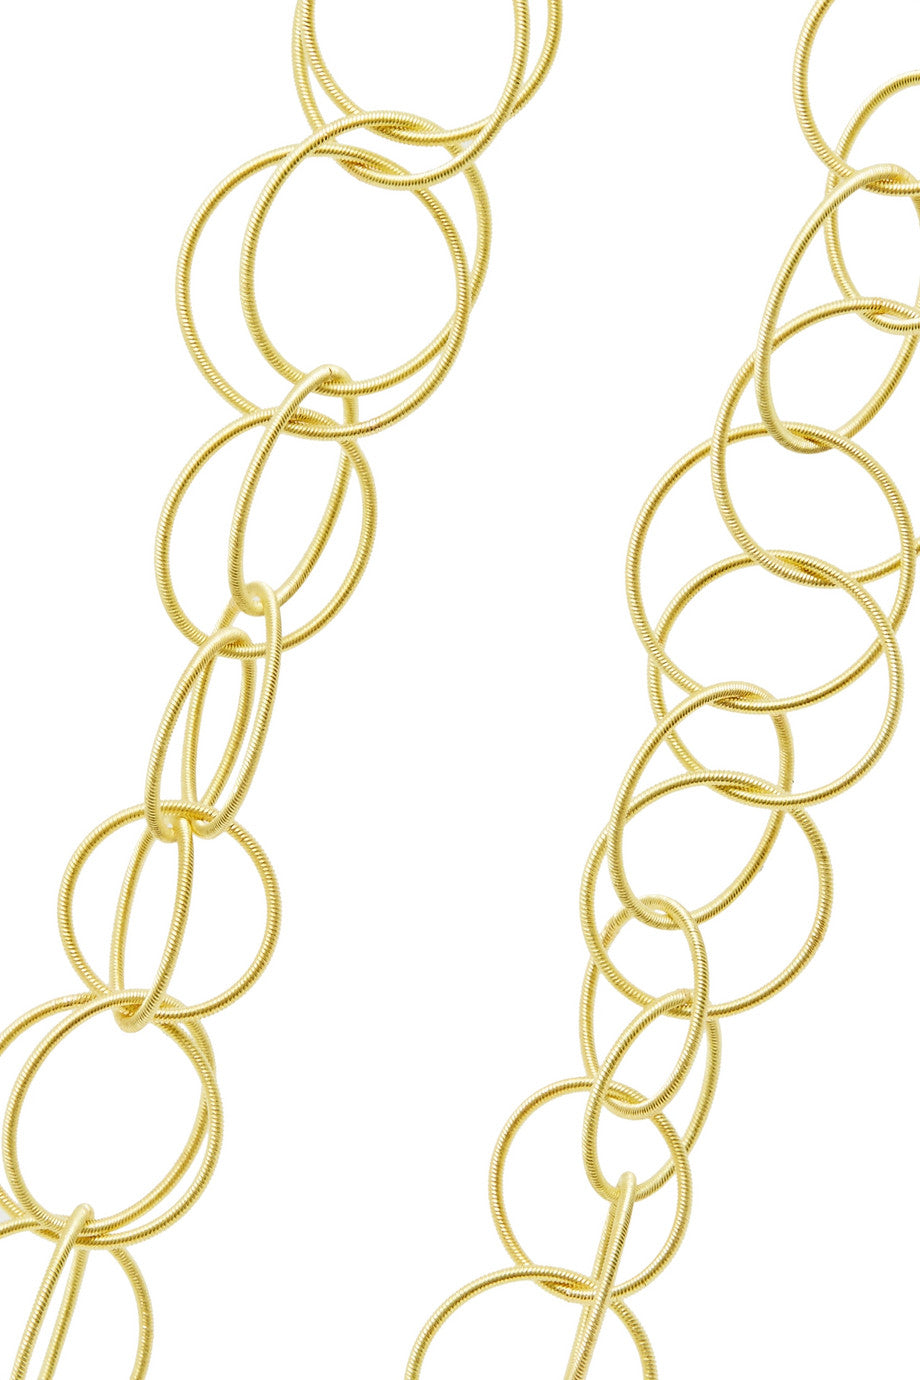 Buccellati - Hawaii - Short Chain Necklace, 18k Yellow Gold